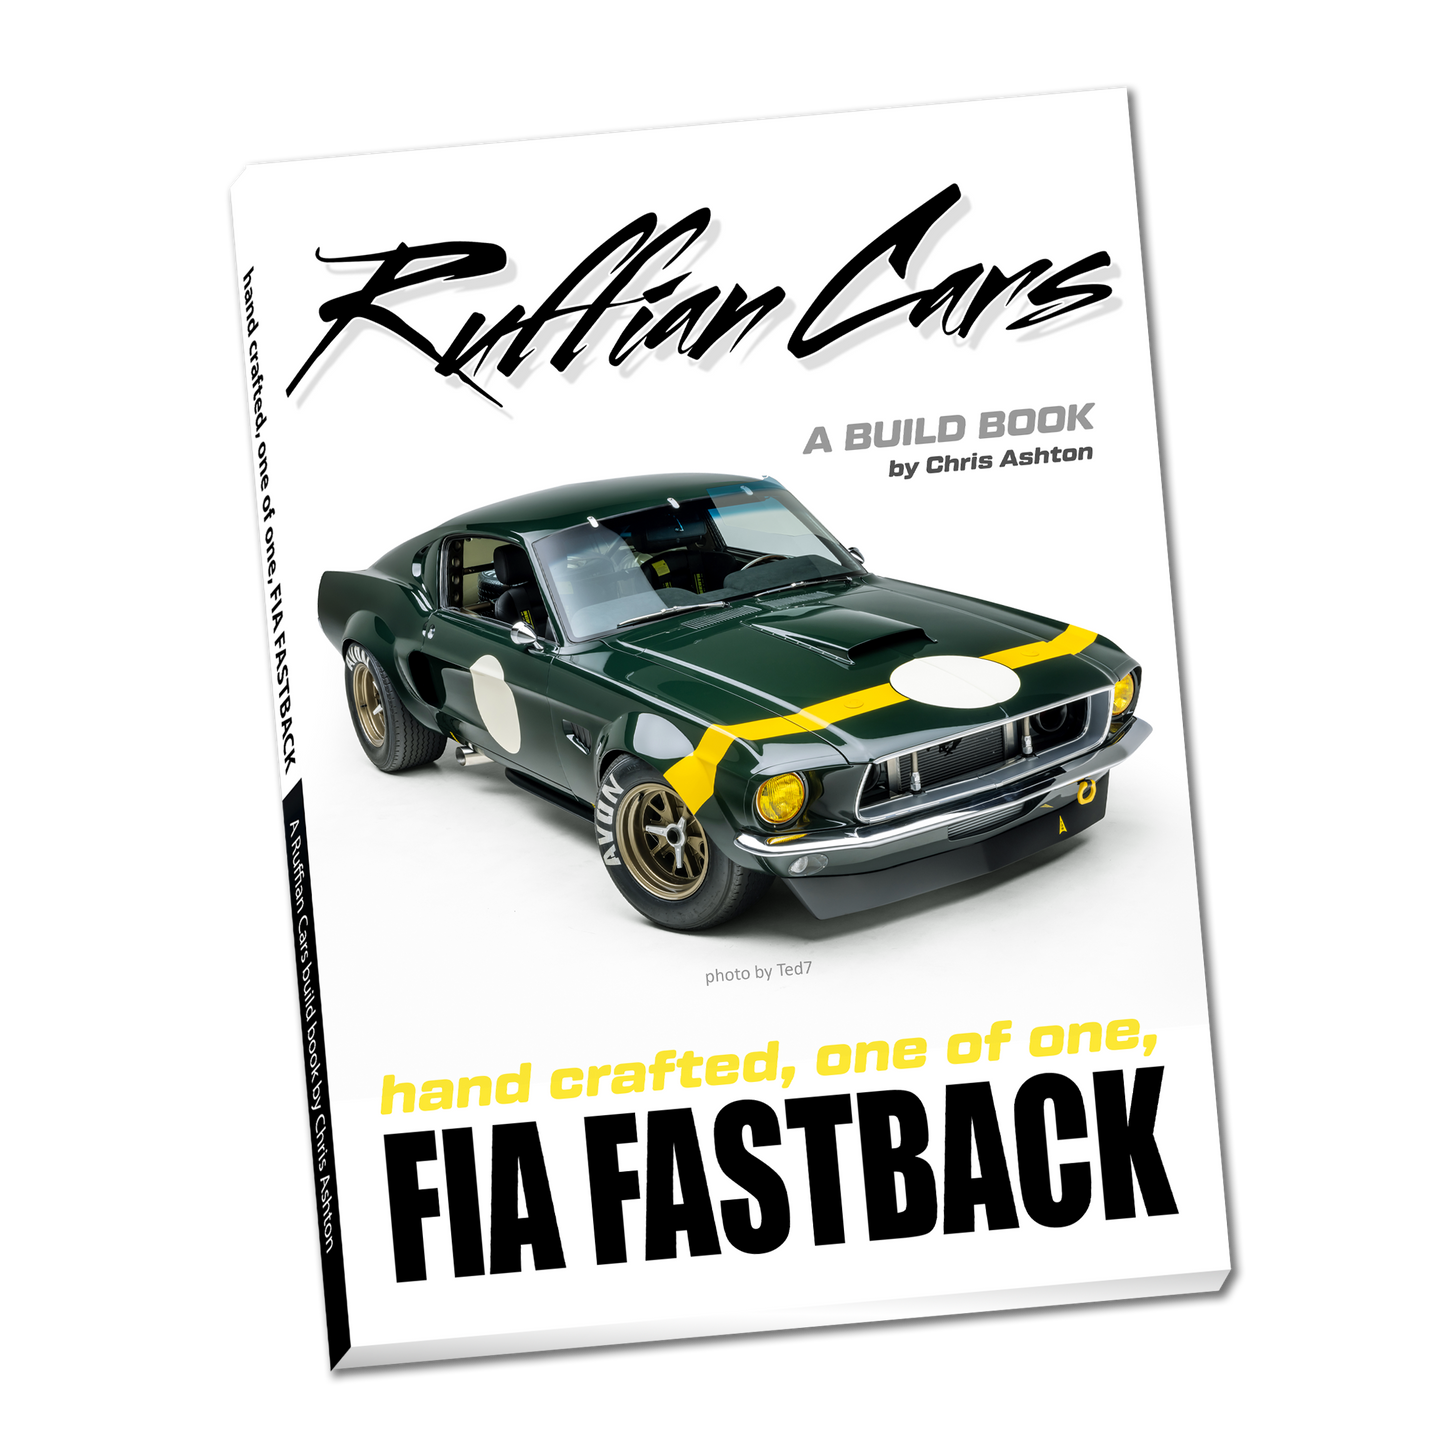 "FIA FASTBACK" A Ruffian Cars Build Book (Softcover + PDF)